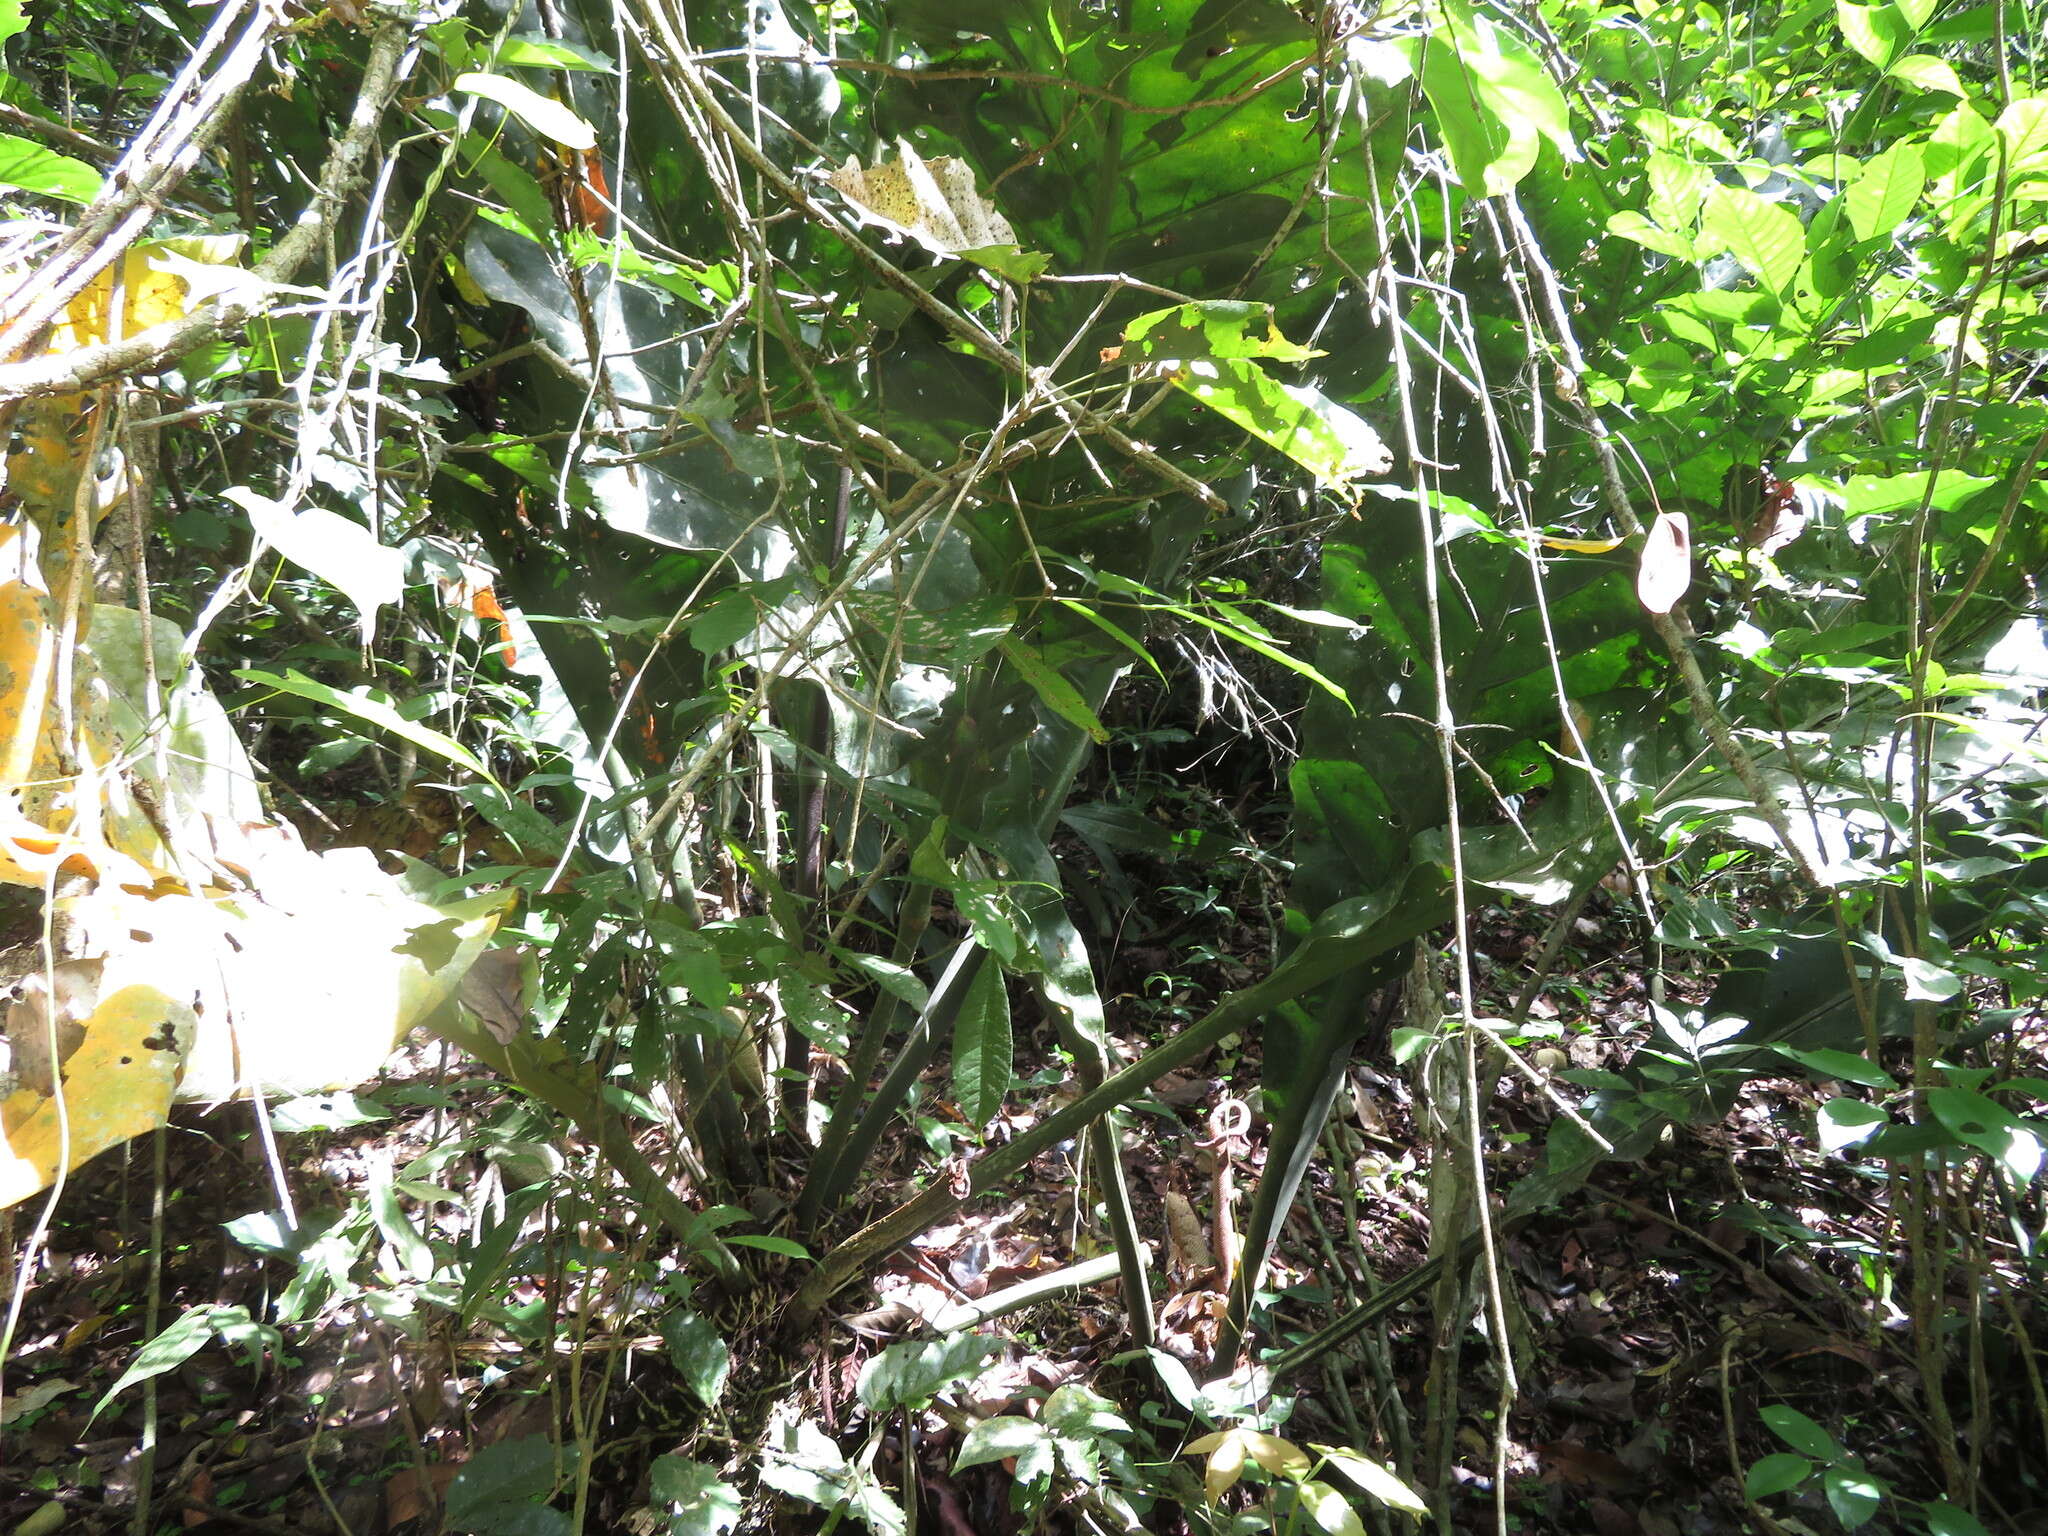 Image of Anthurium plowmanii Croat